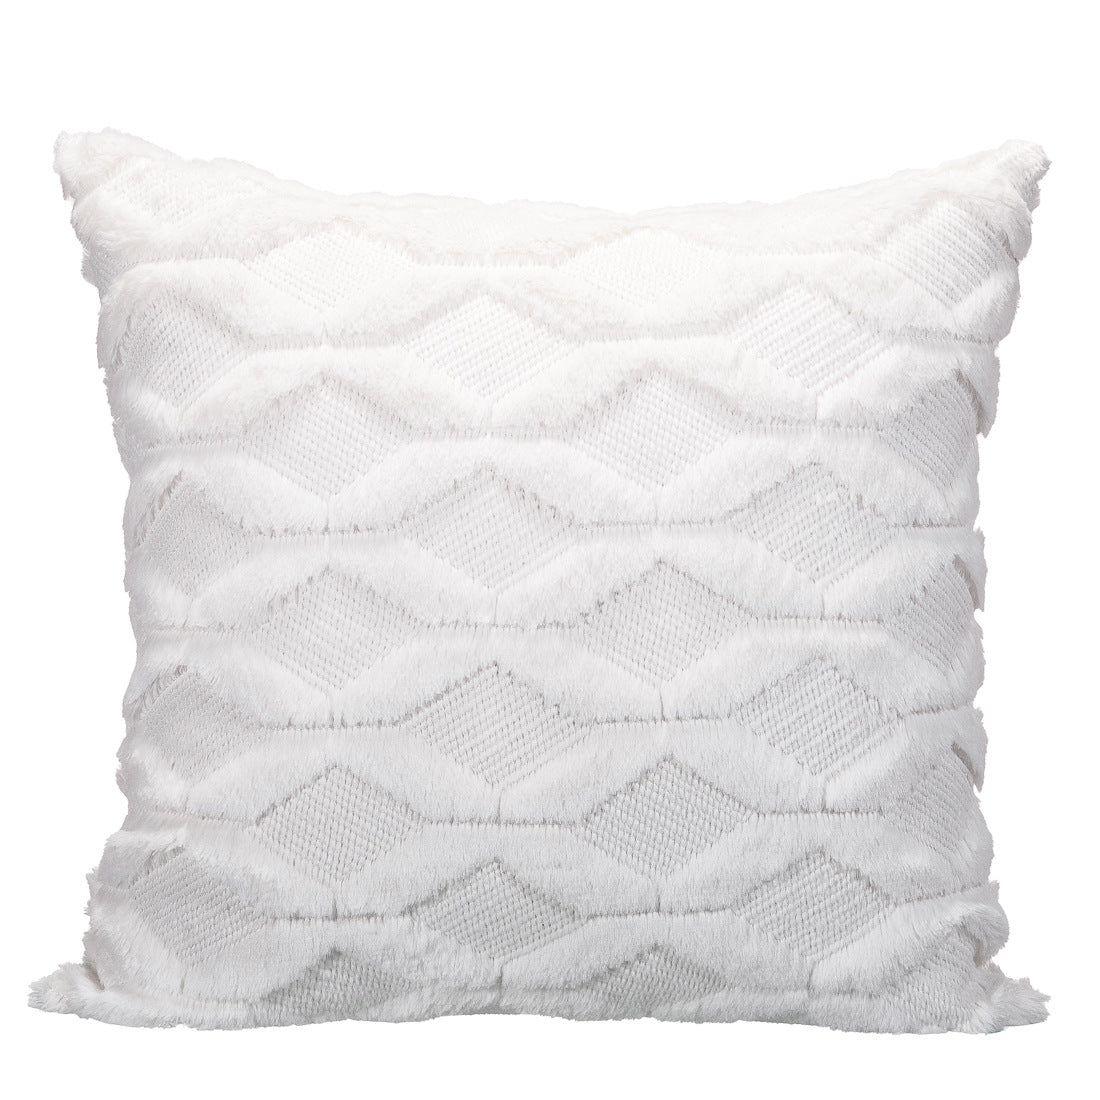 Geometric soft light plush decoration pillow case